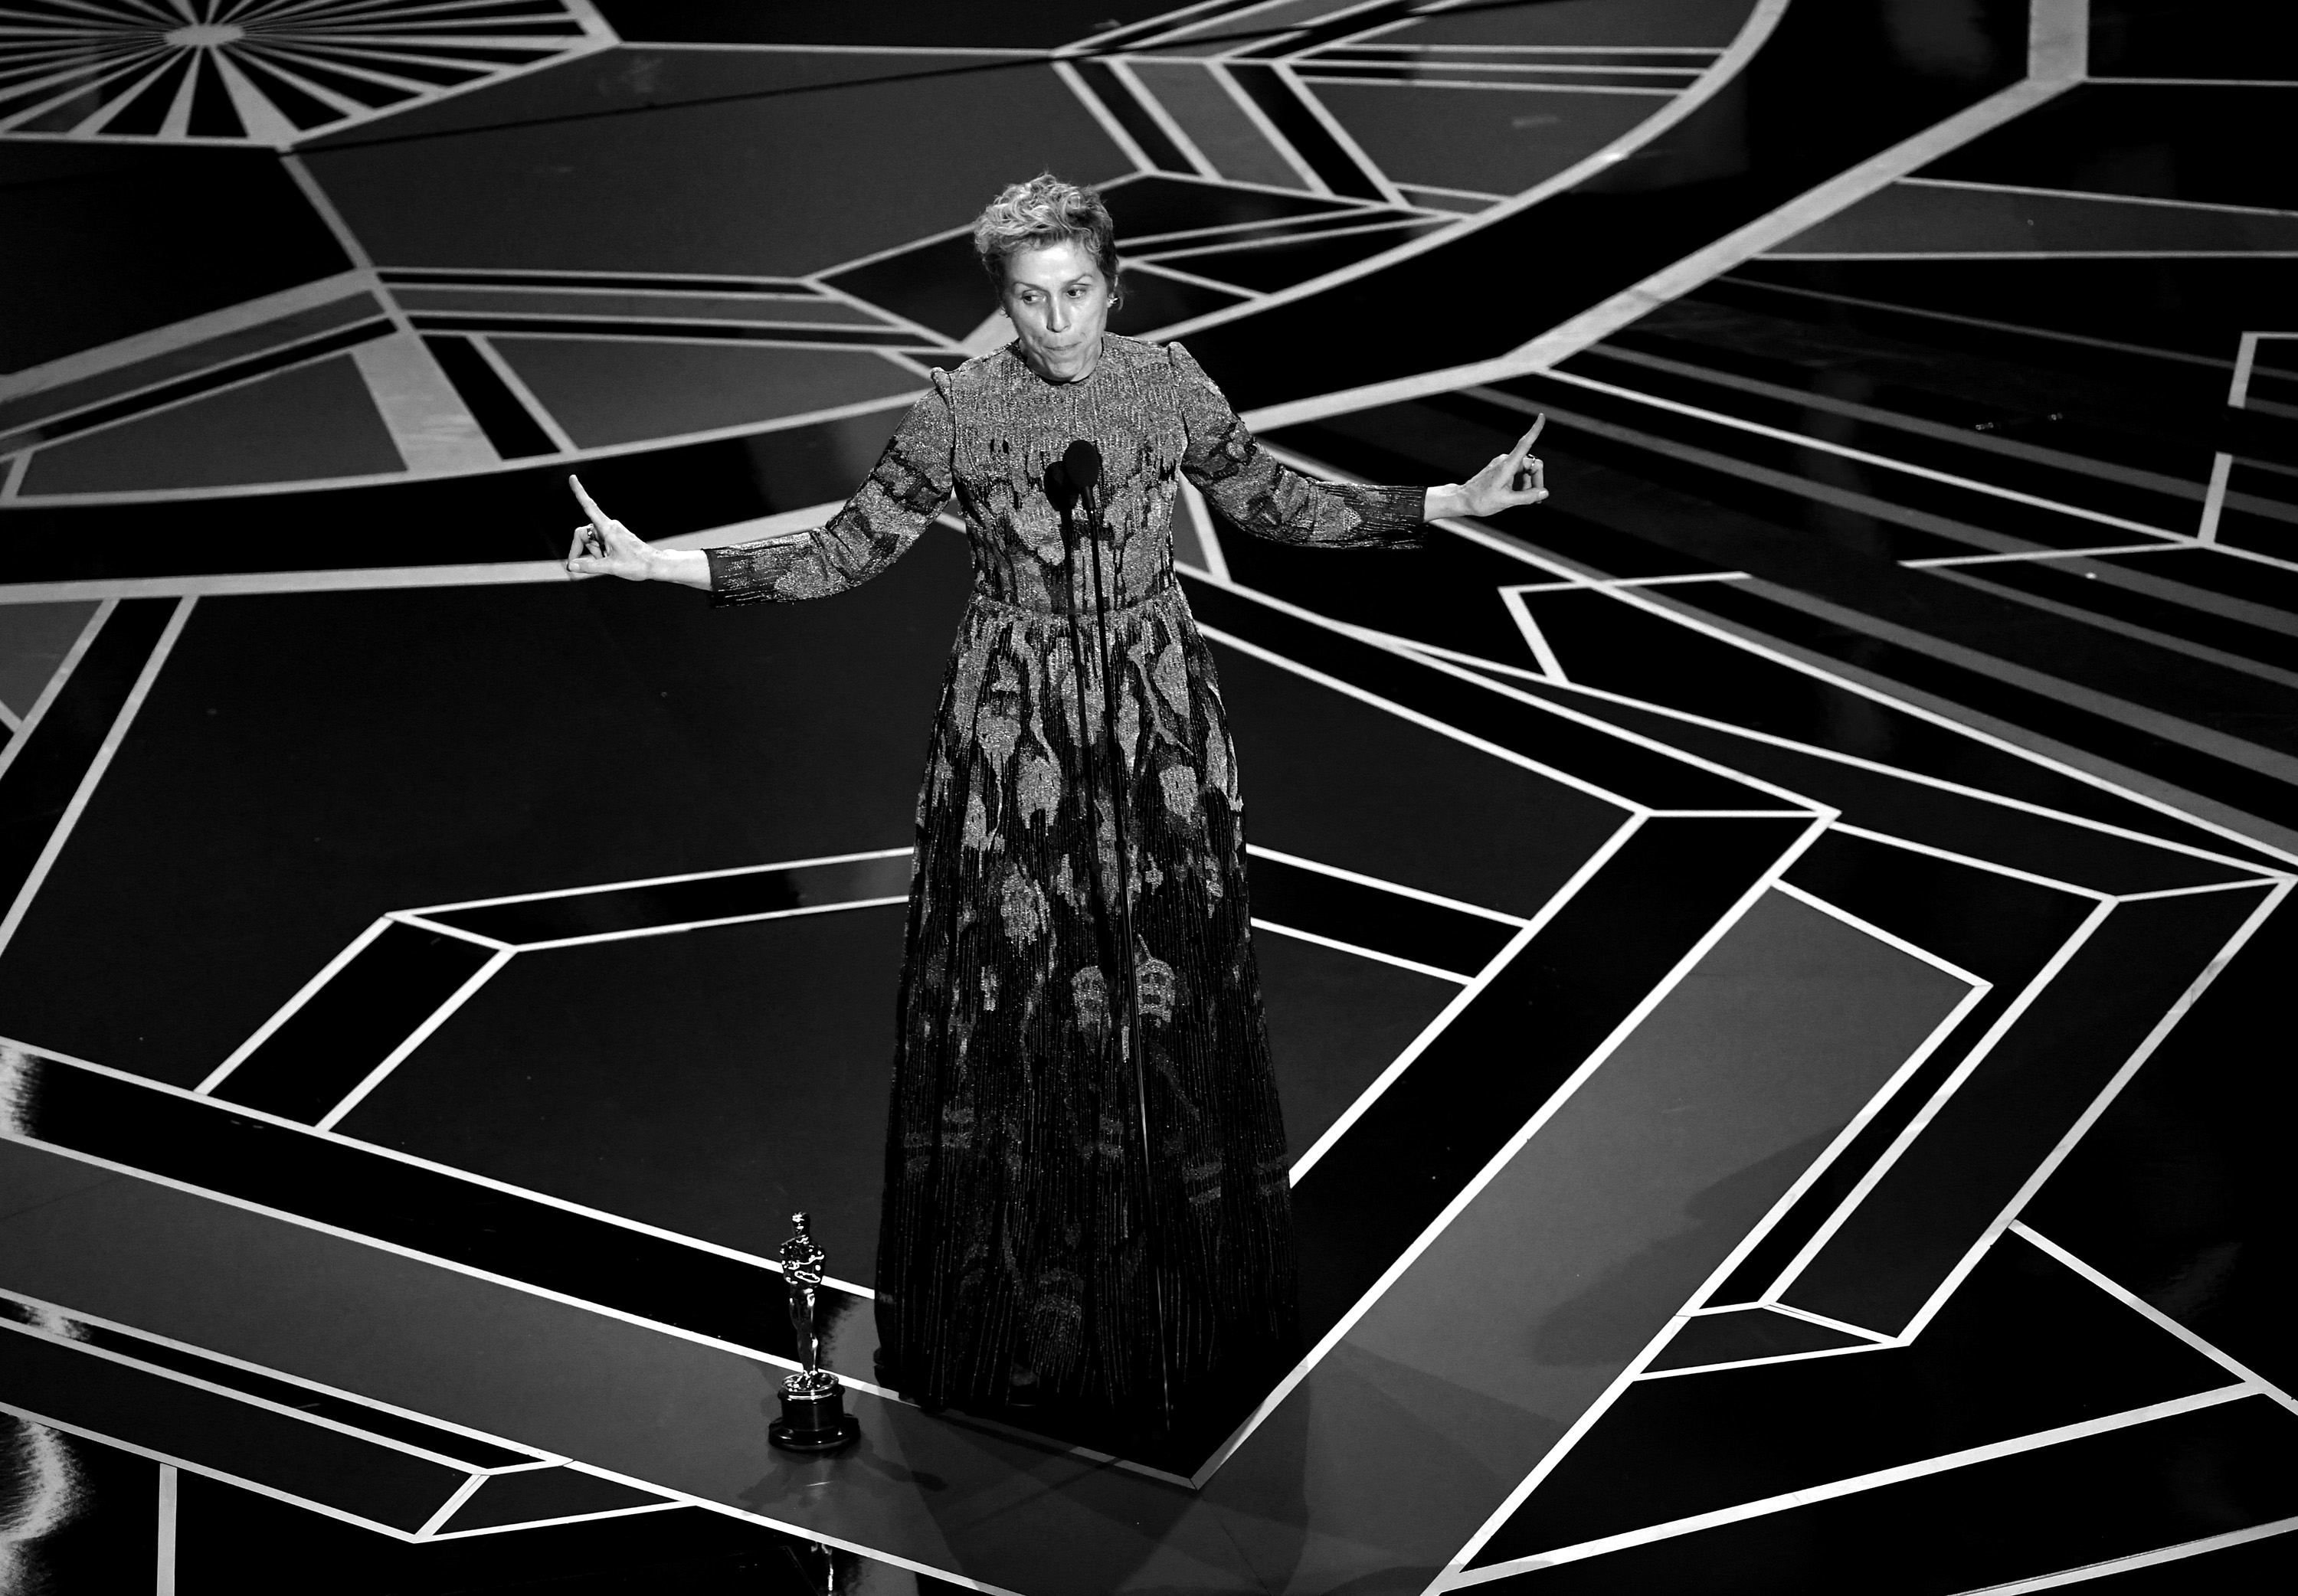 Frances McDormand accepts the Oscar for best actress